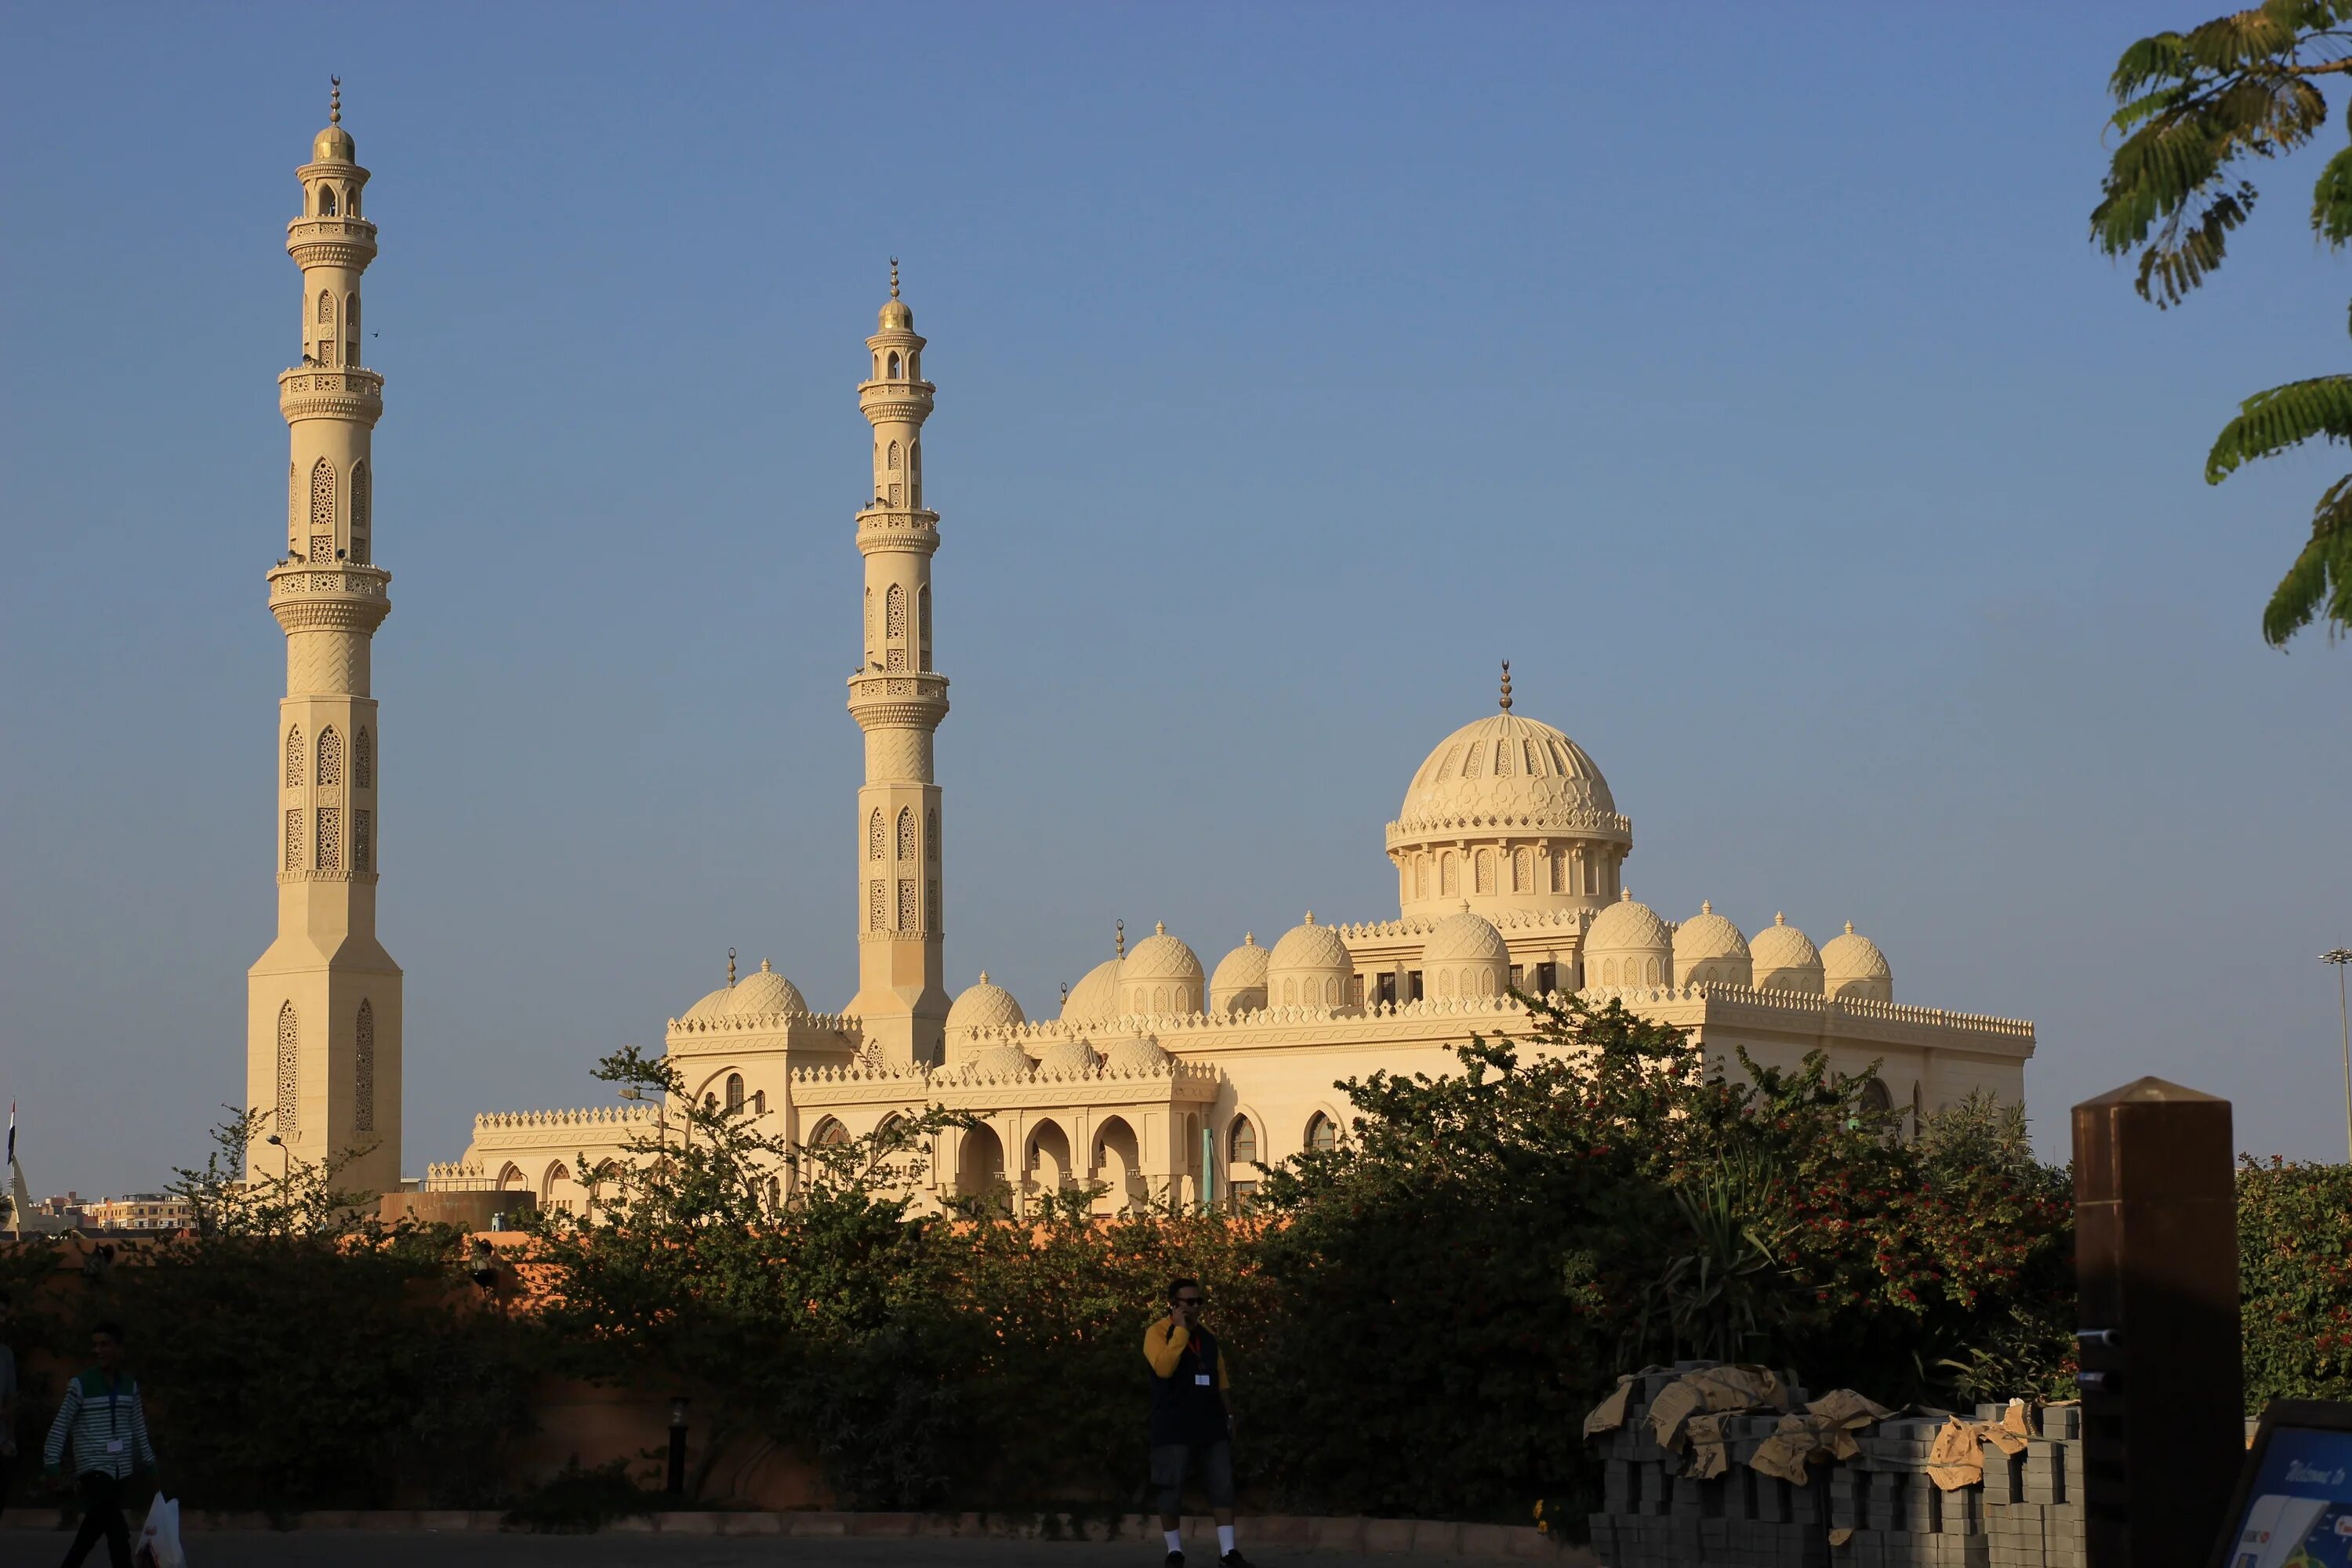 Мечеть Абу Эль-Аббаса. Египет мечеть Хургада. Мечеть в Каире Египет. Мечеть Эльмина Хургада.